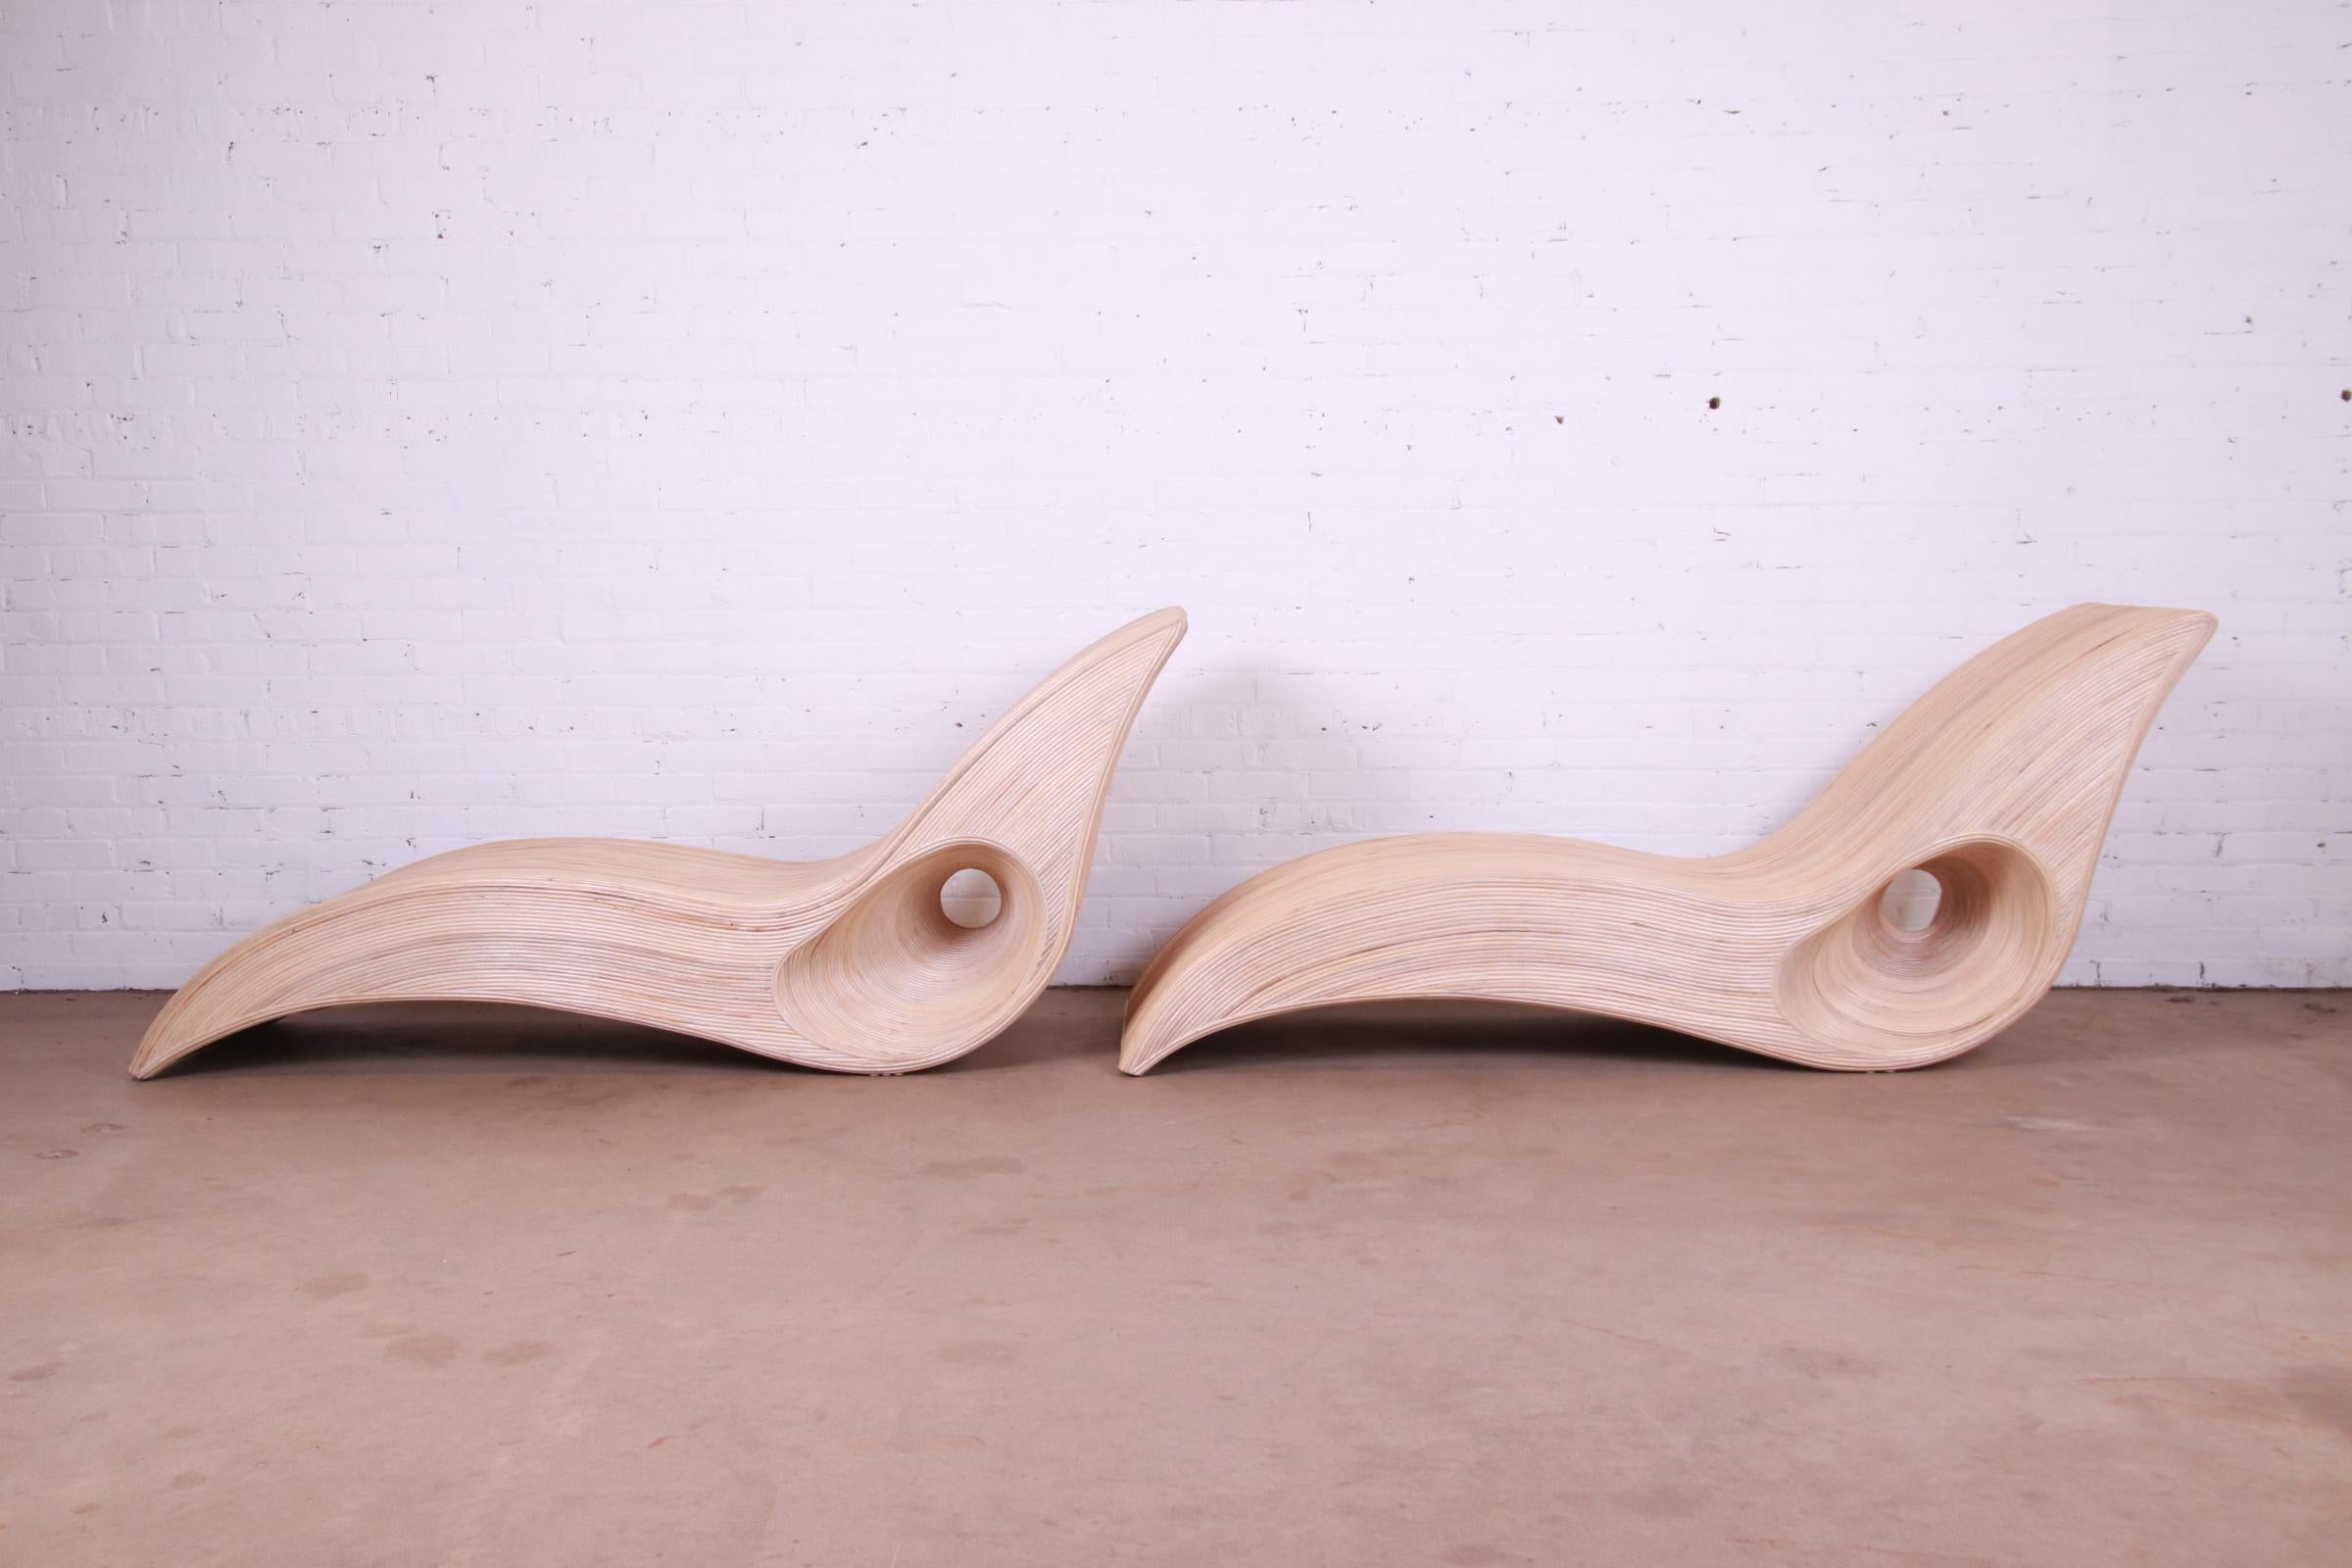 Betty Cobonpue Sculptural Split Reed Rattan Chaise Lounges, Pair For Sale 1